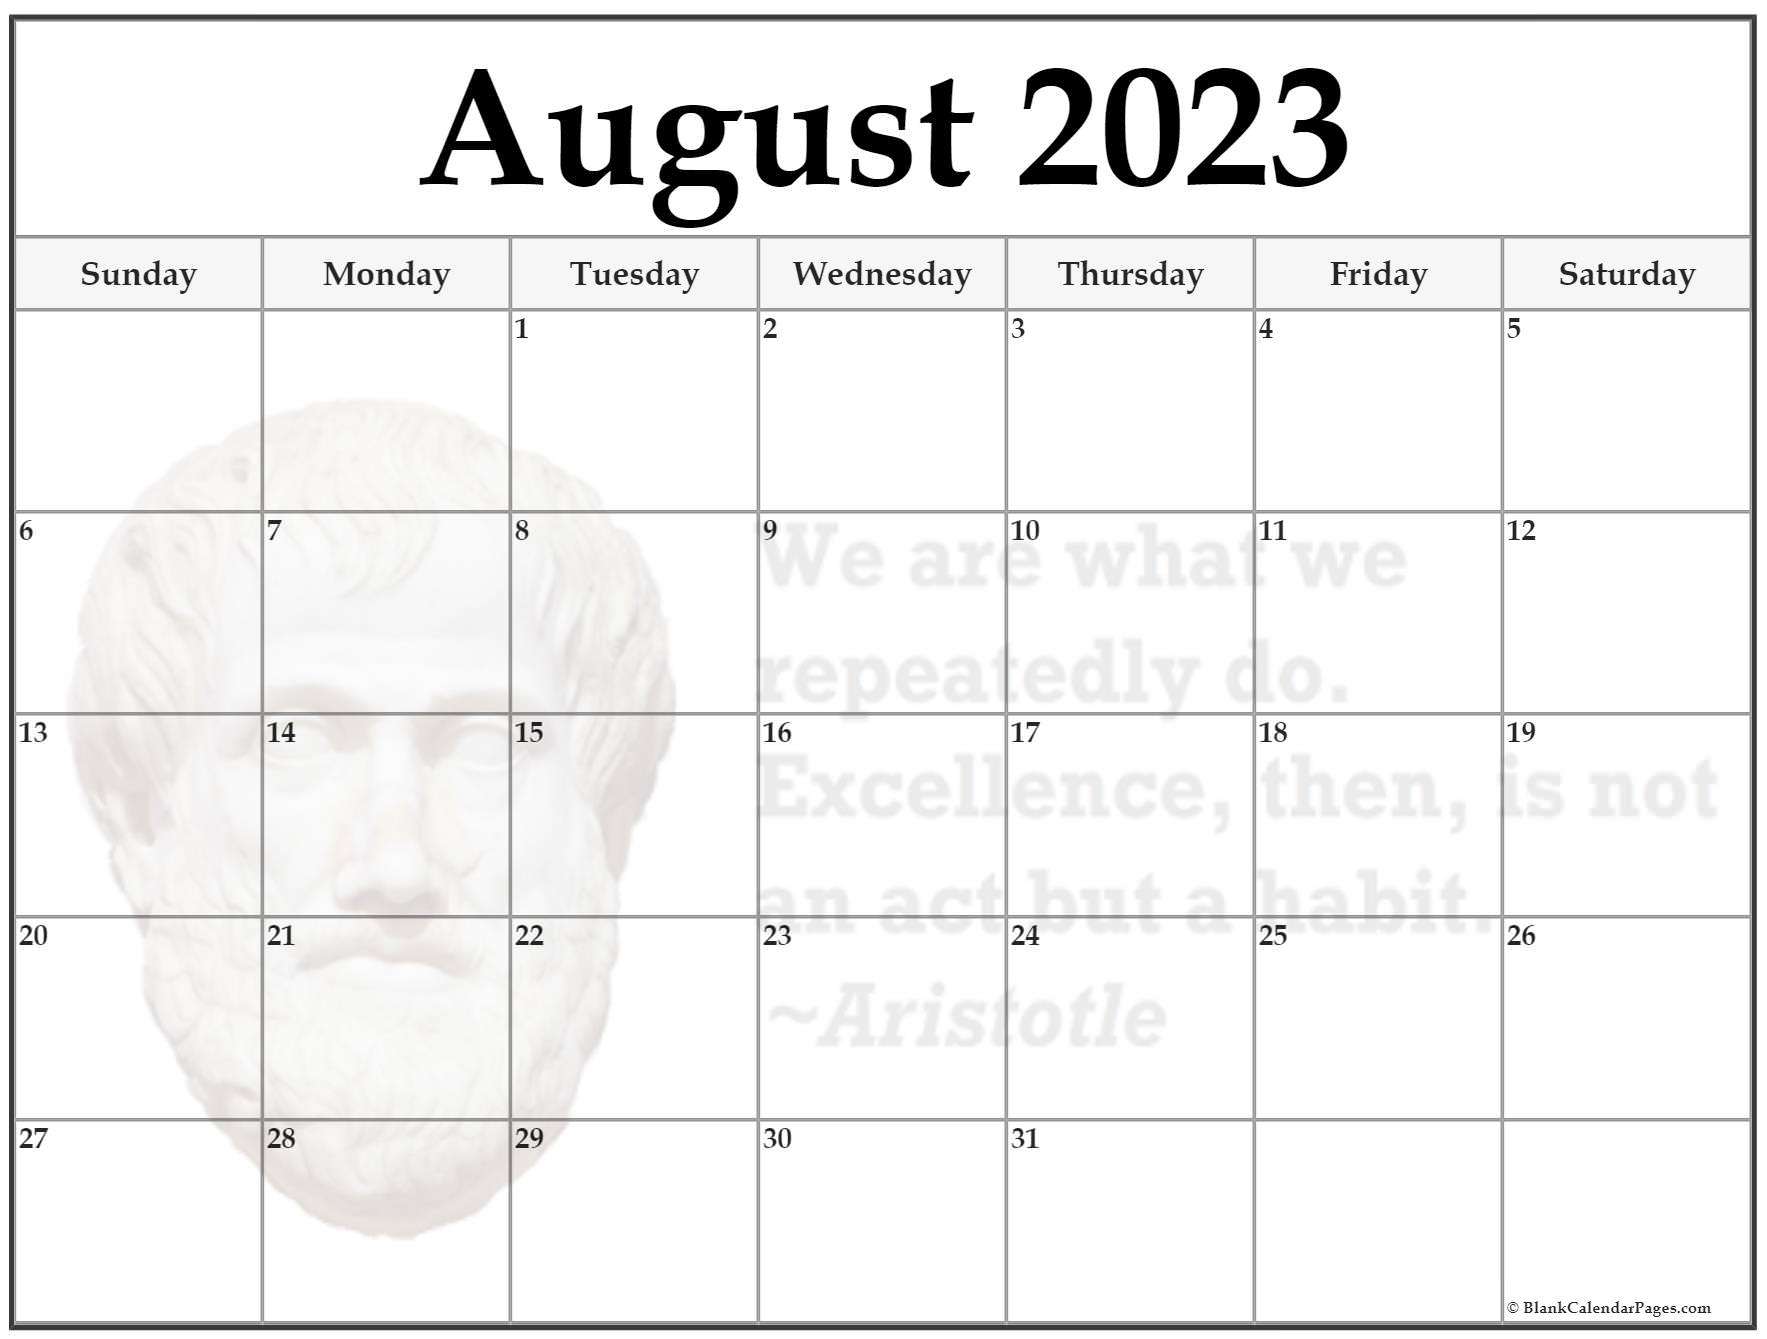 august 2023 calendar free printable calendar - august 2023 online ...